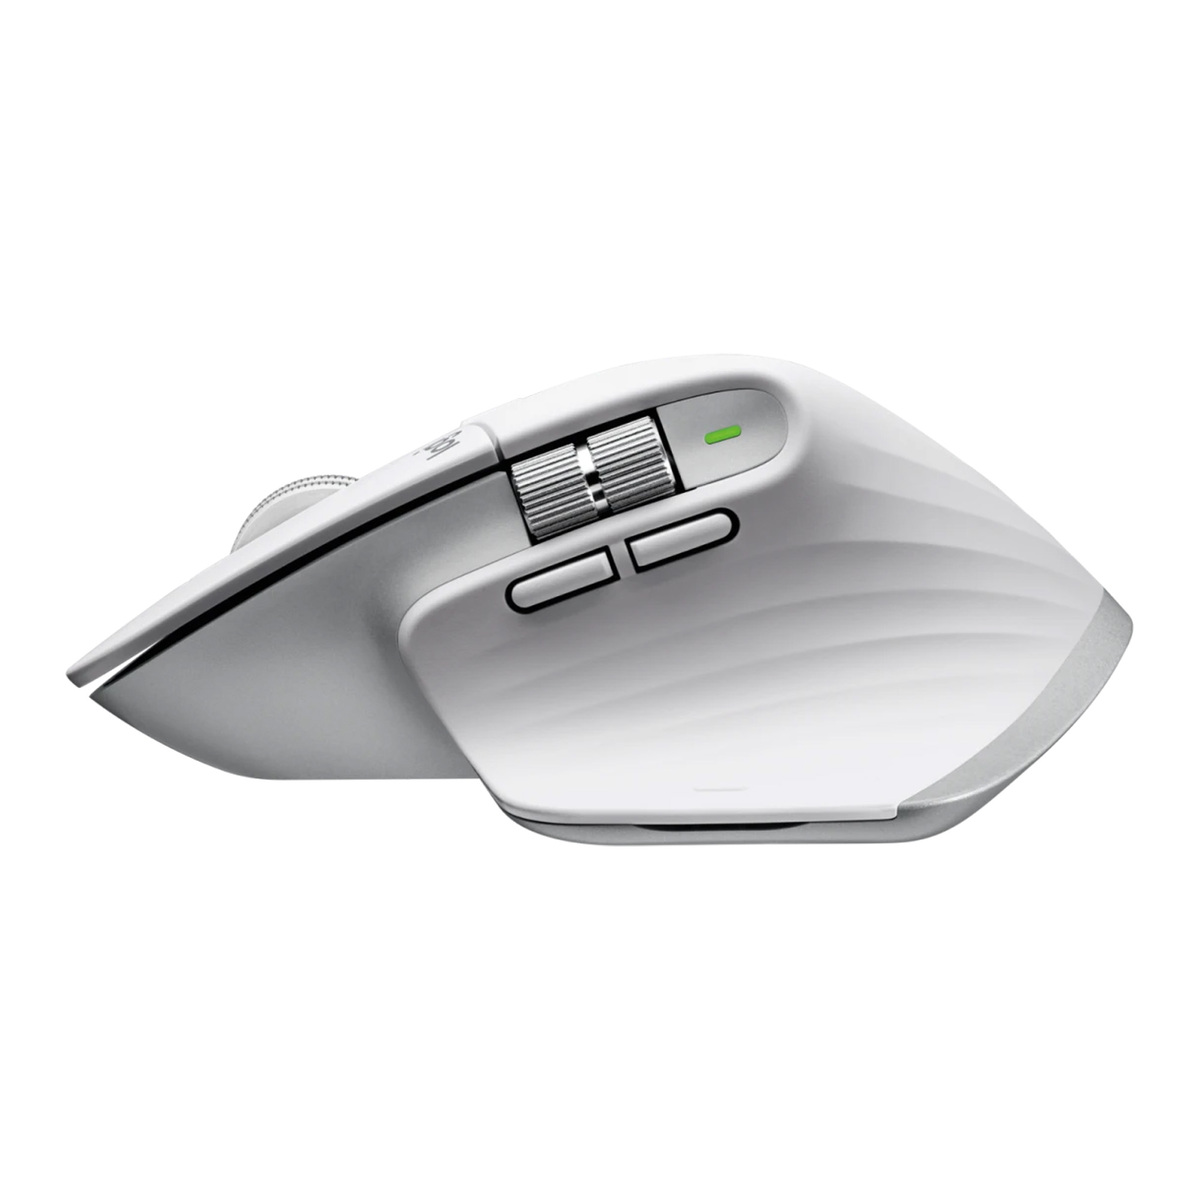 Logitech MX Master 35 White Mouse: Enhanced Productivity and